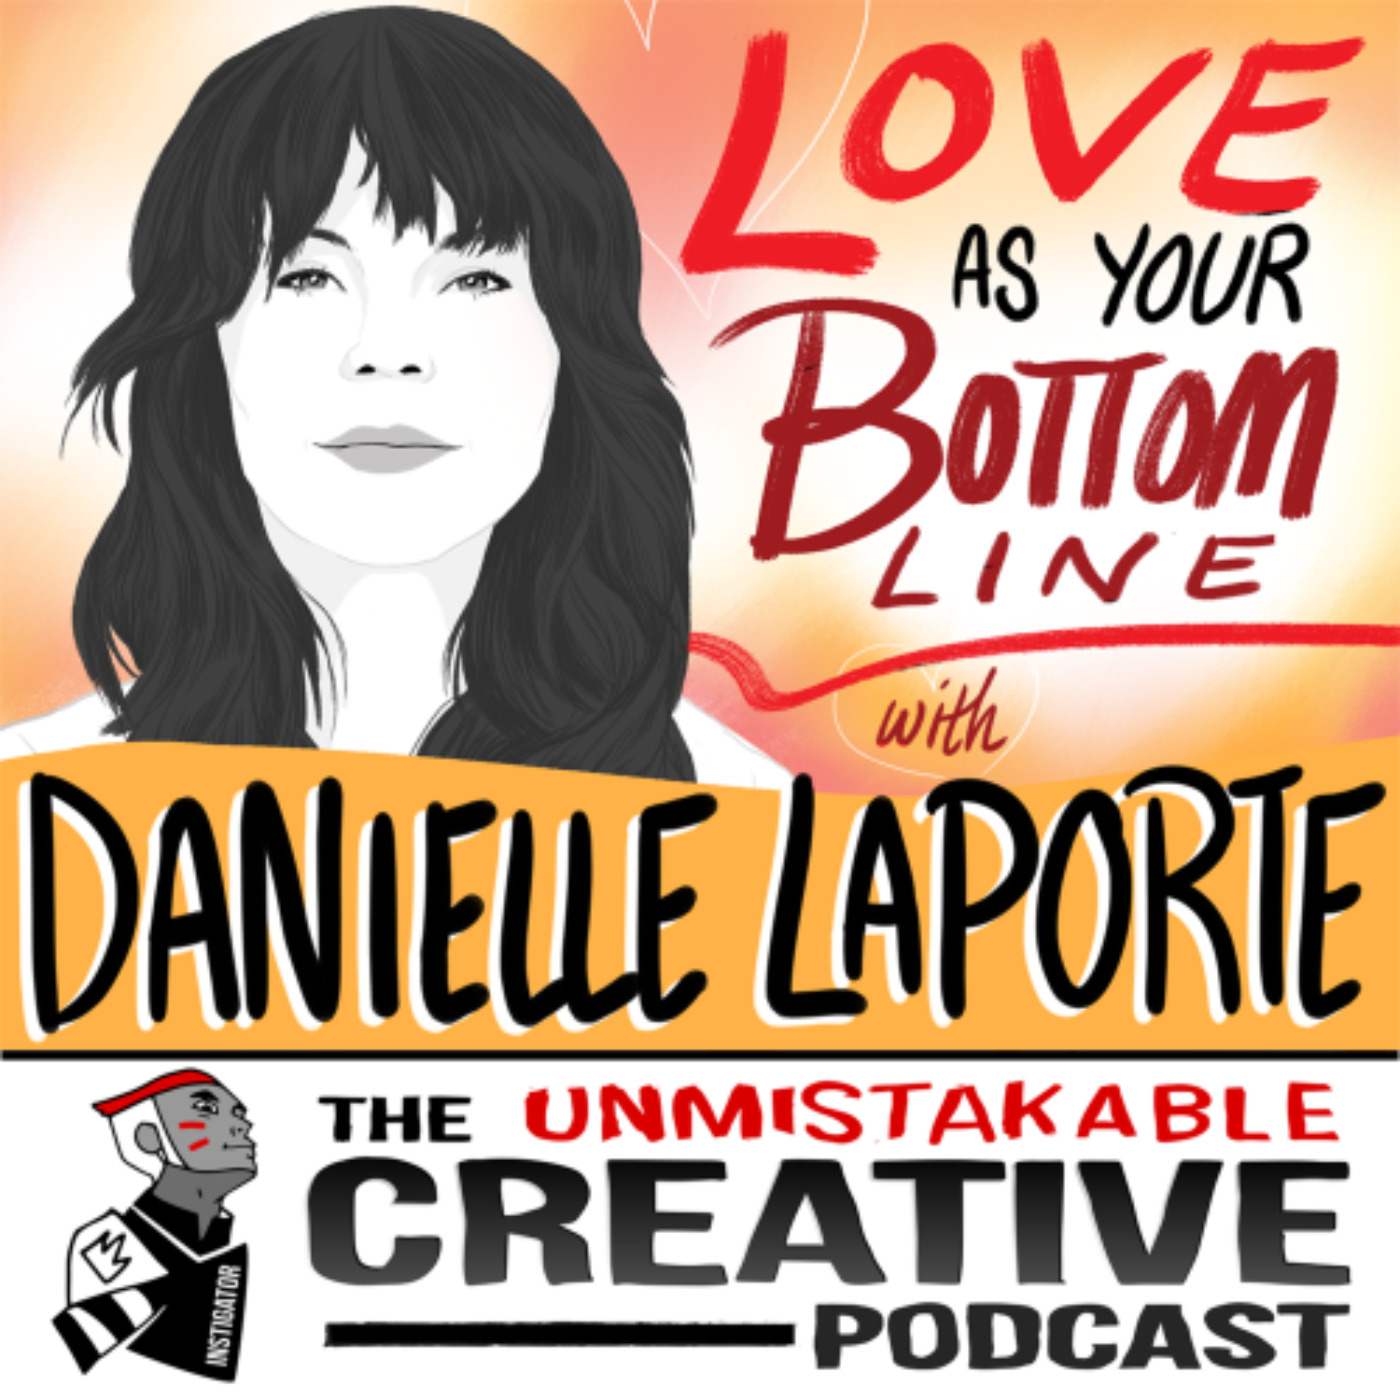 The Wisdom Series: Danielle Laporte | Love as Your Bottom Line Image